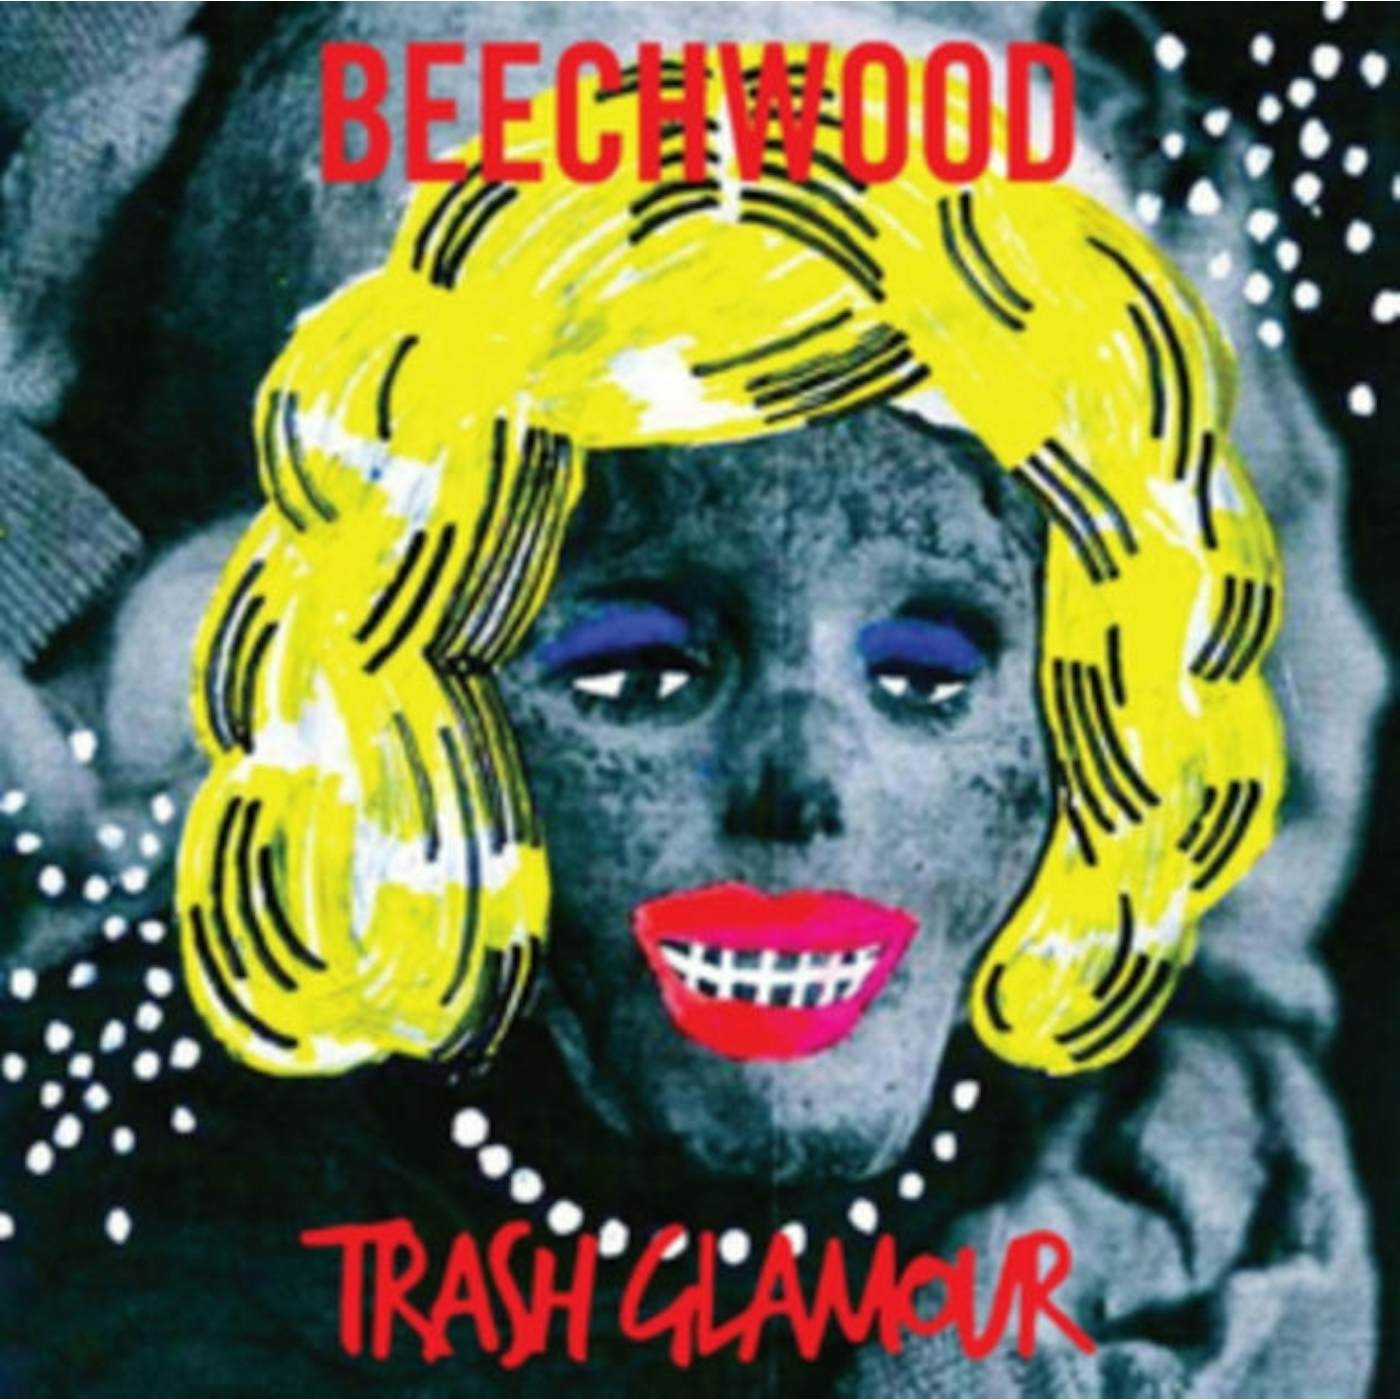 Beechwood LP - Trash Glamour (Vinyl)